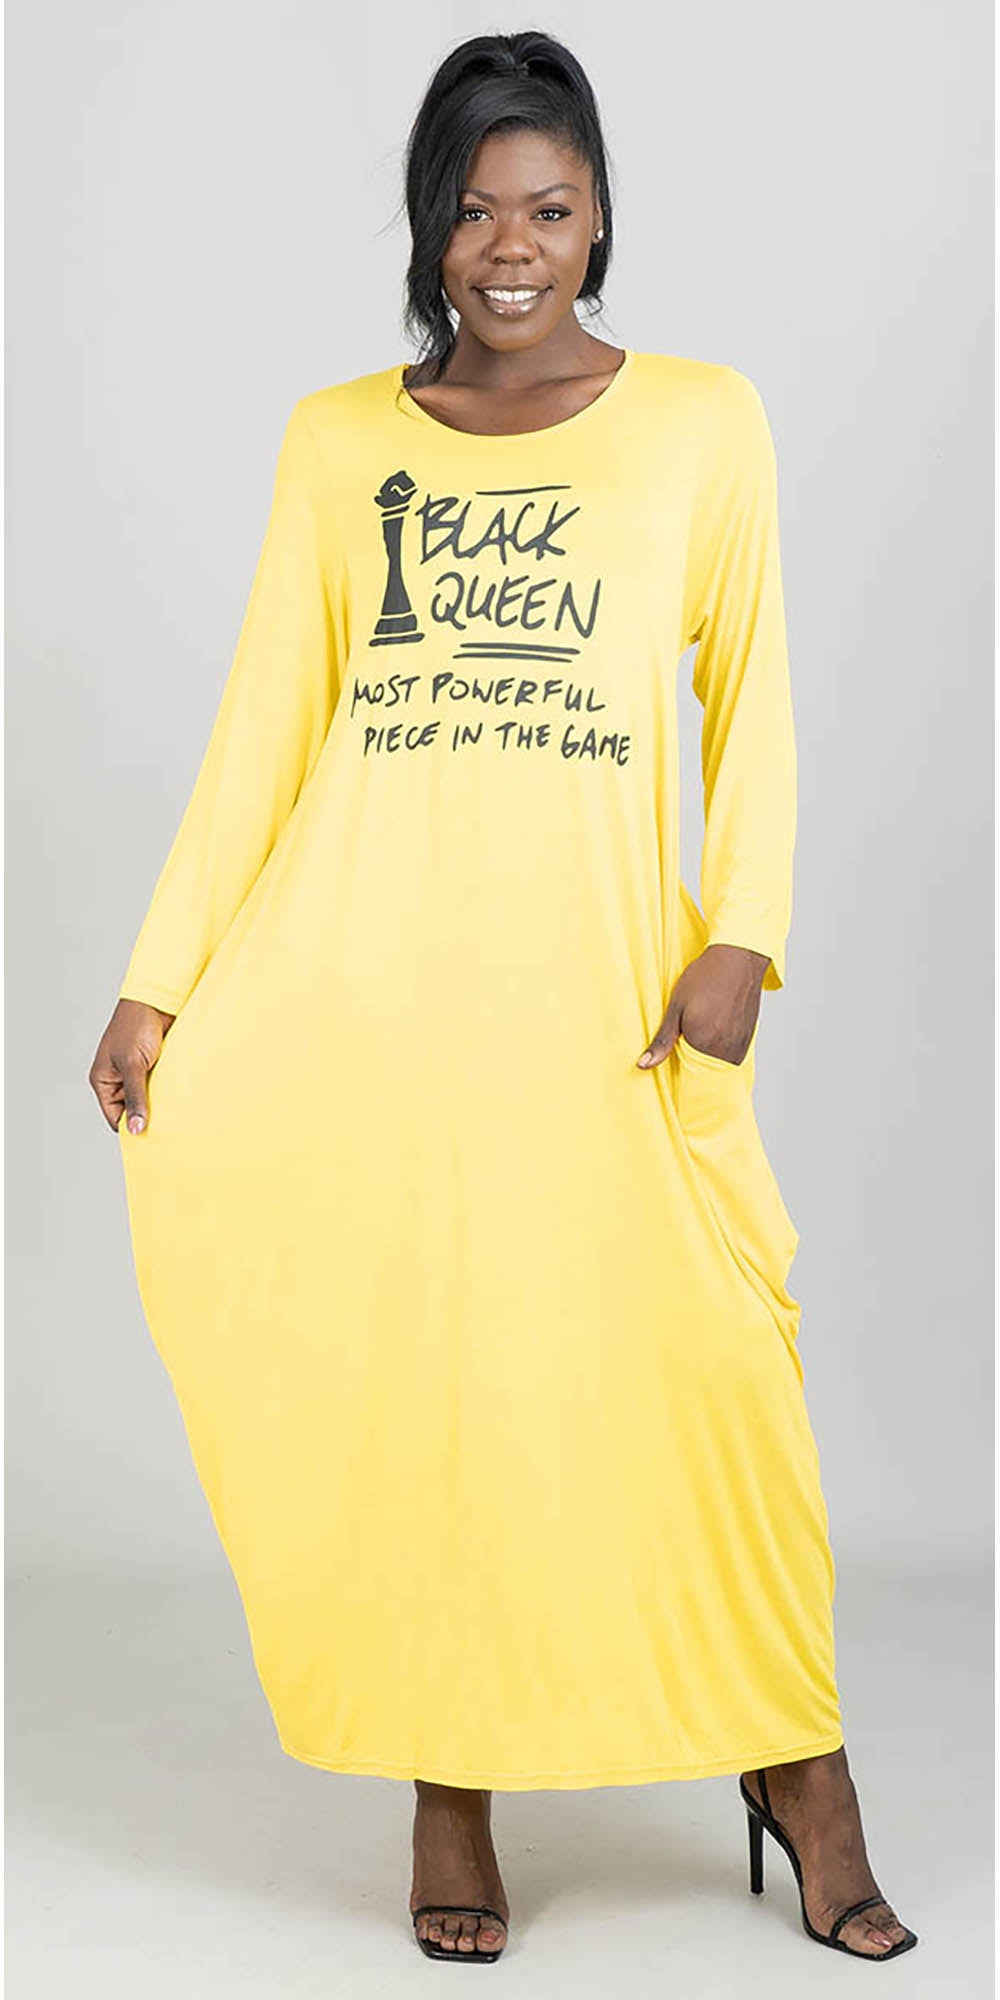 KaraChic - CHH22122 - Yellow Black - Black Queen Print Knit Maxi Dress